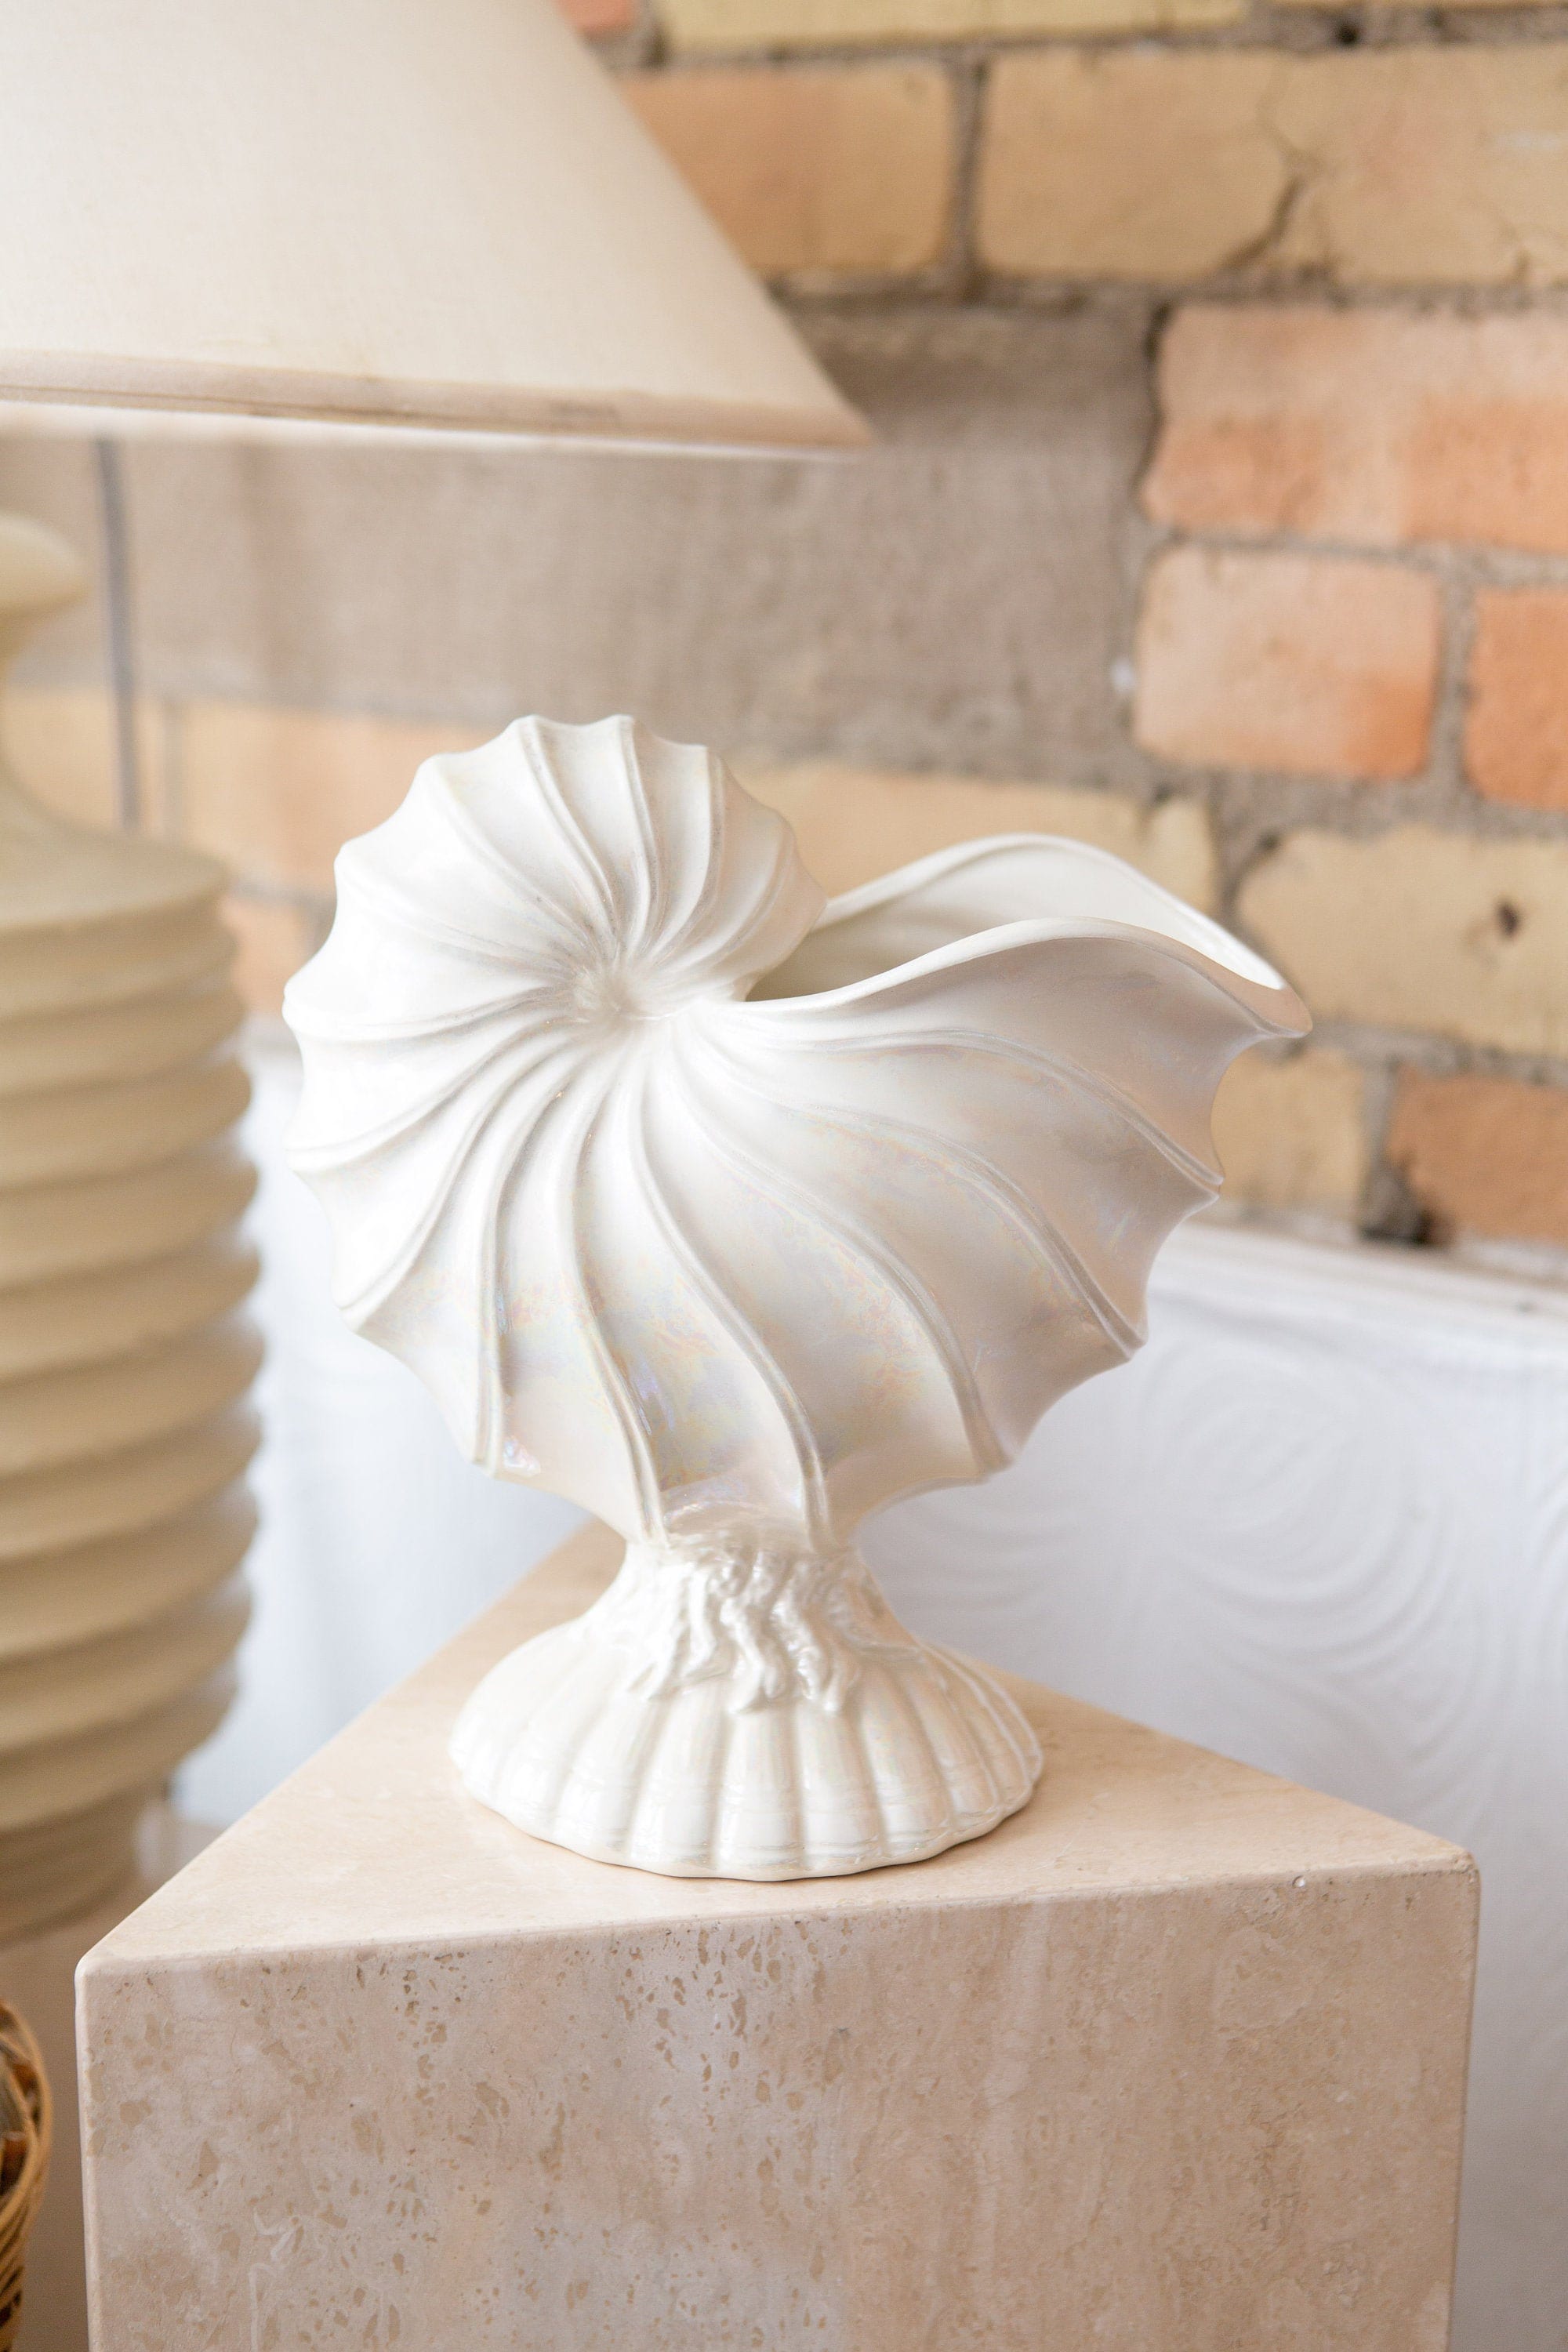 White Ceramic Shell Planter